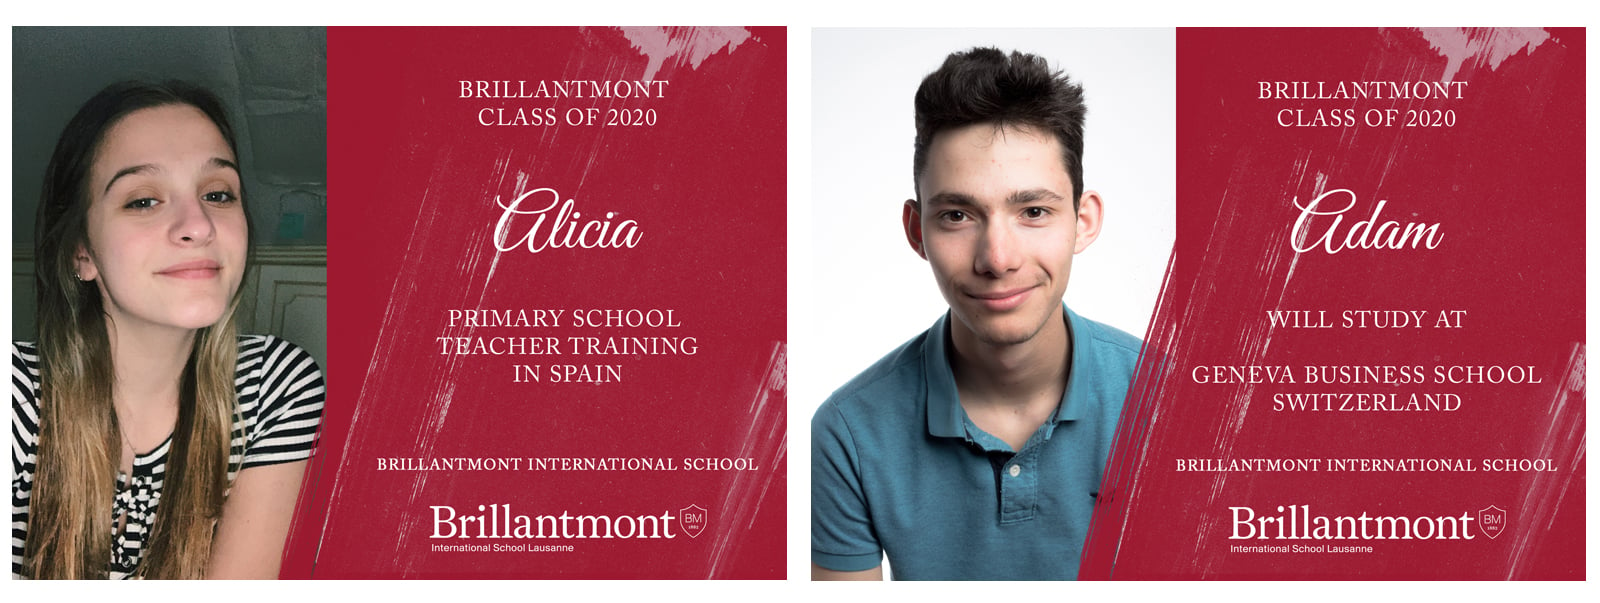 Brillantmont Graduates Class of 2020 - University choices 5